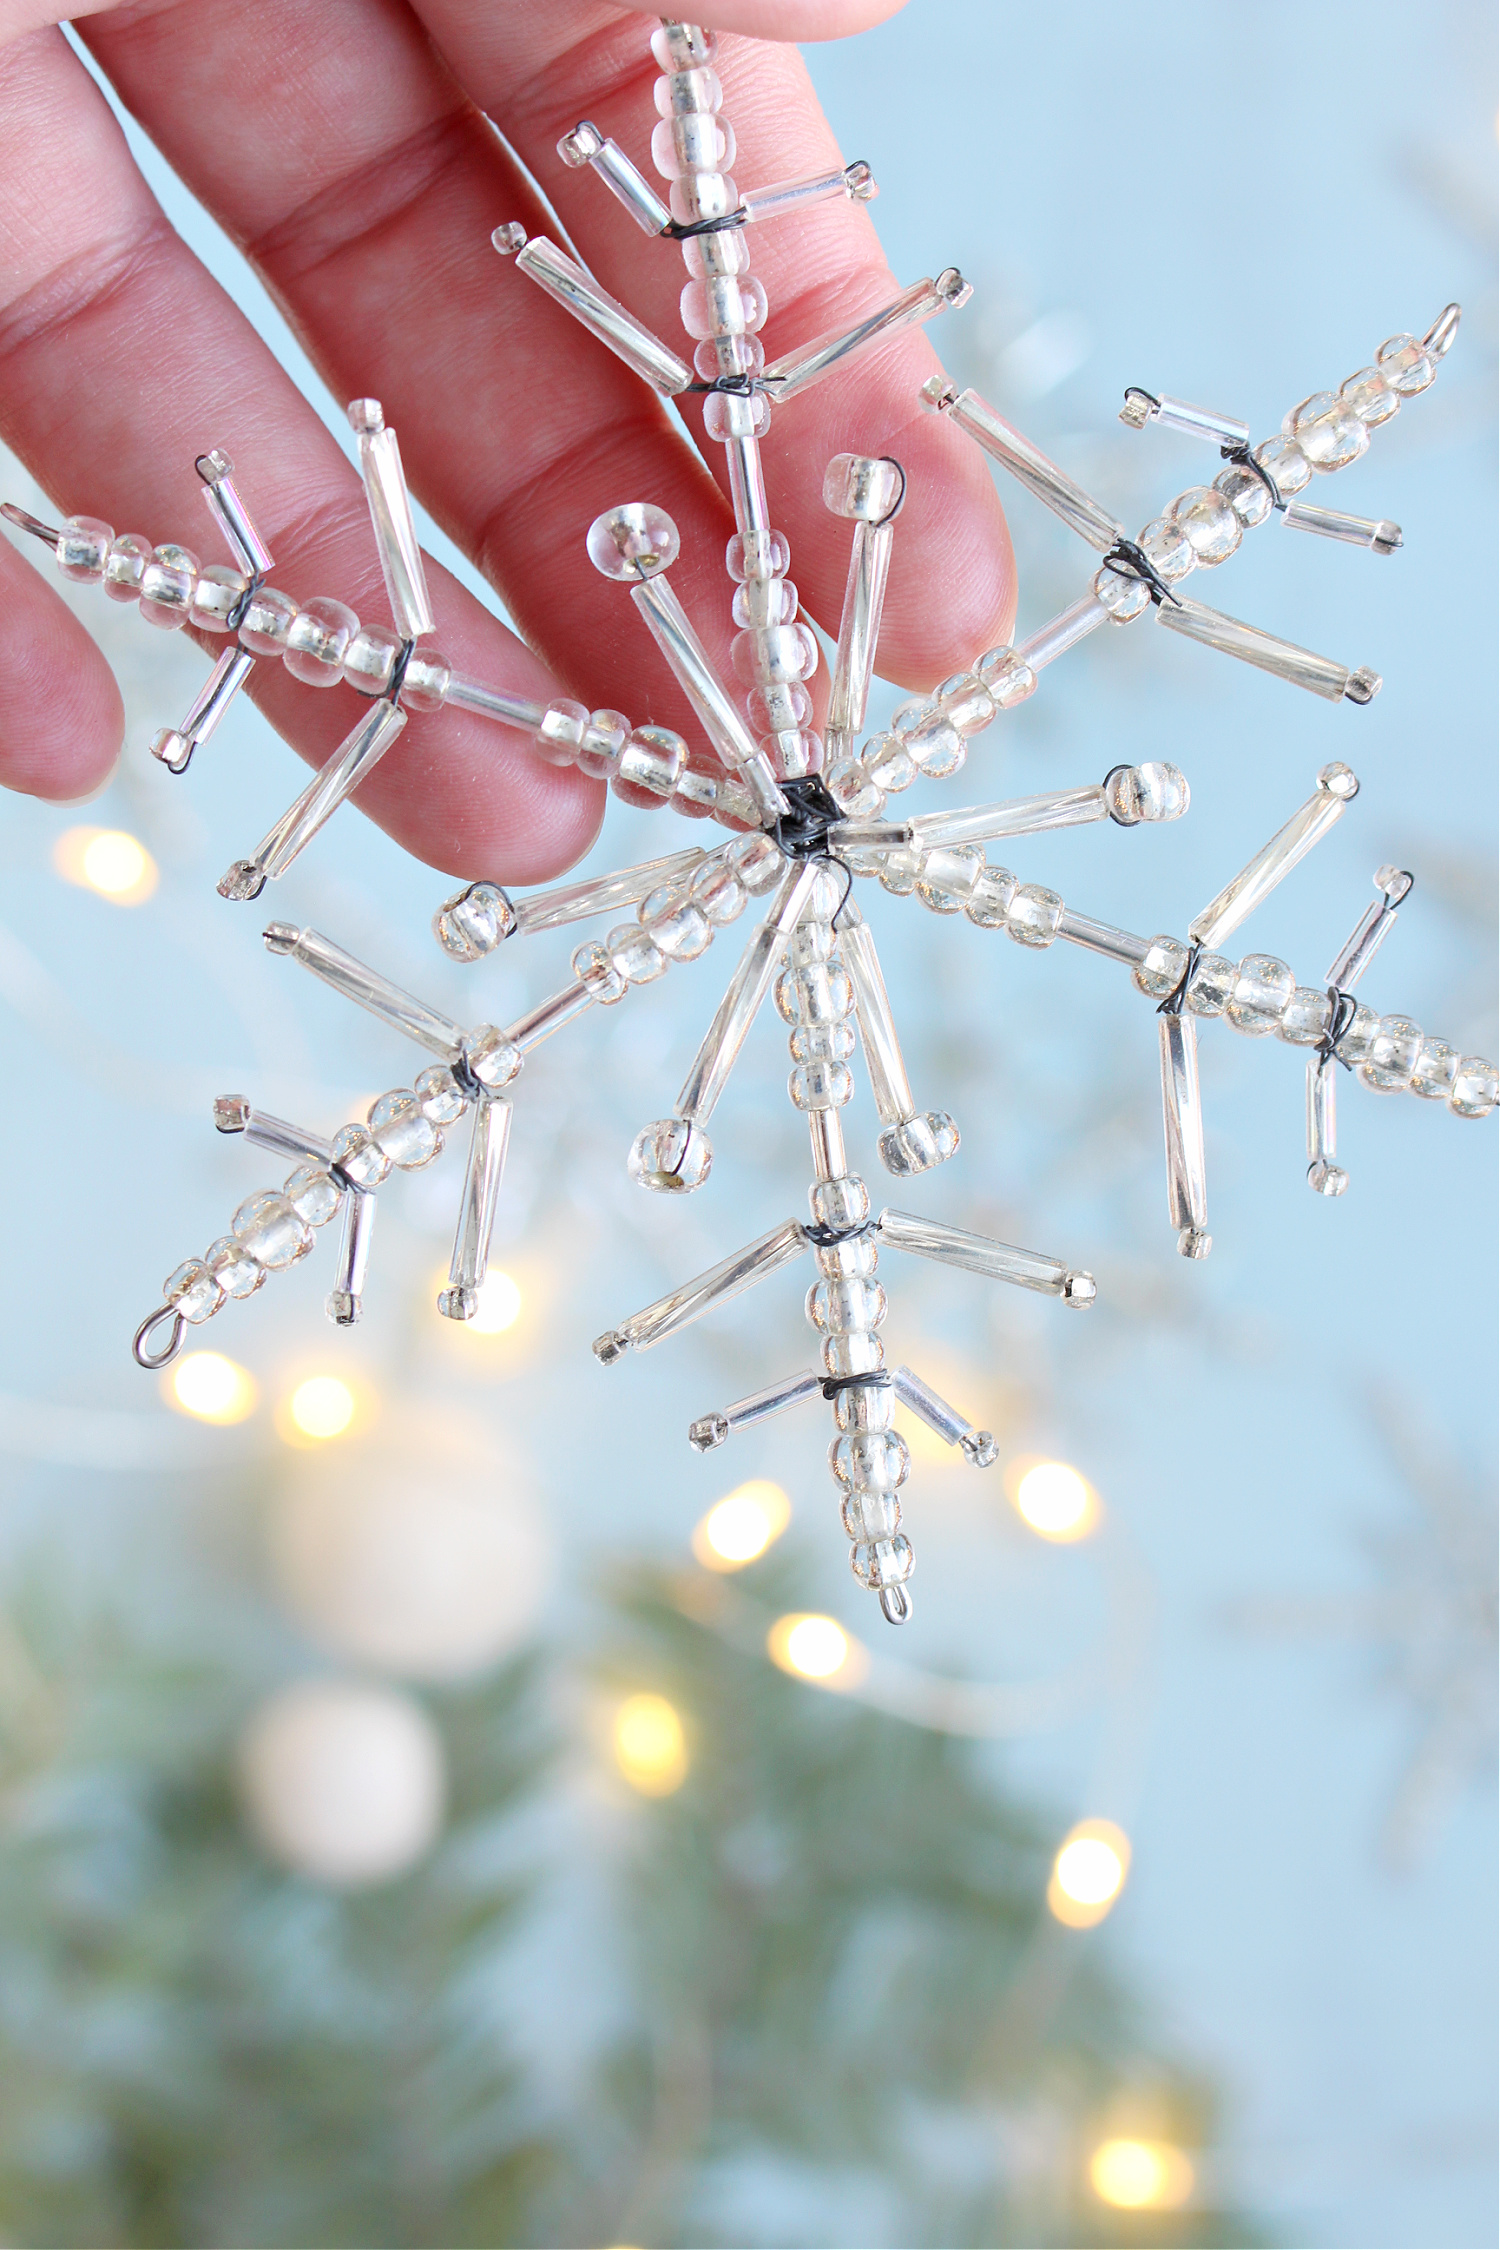 How to Make a Beaded Snowflake